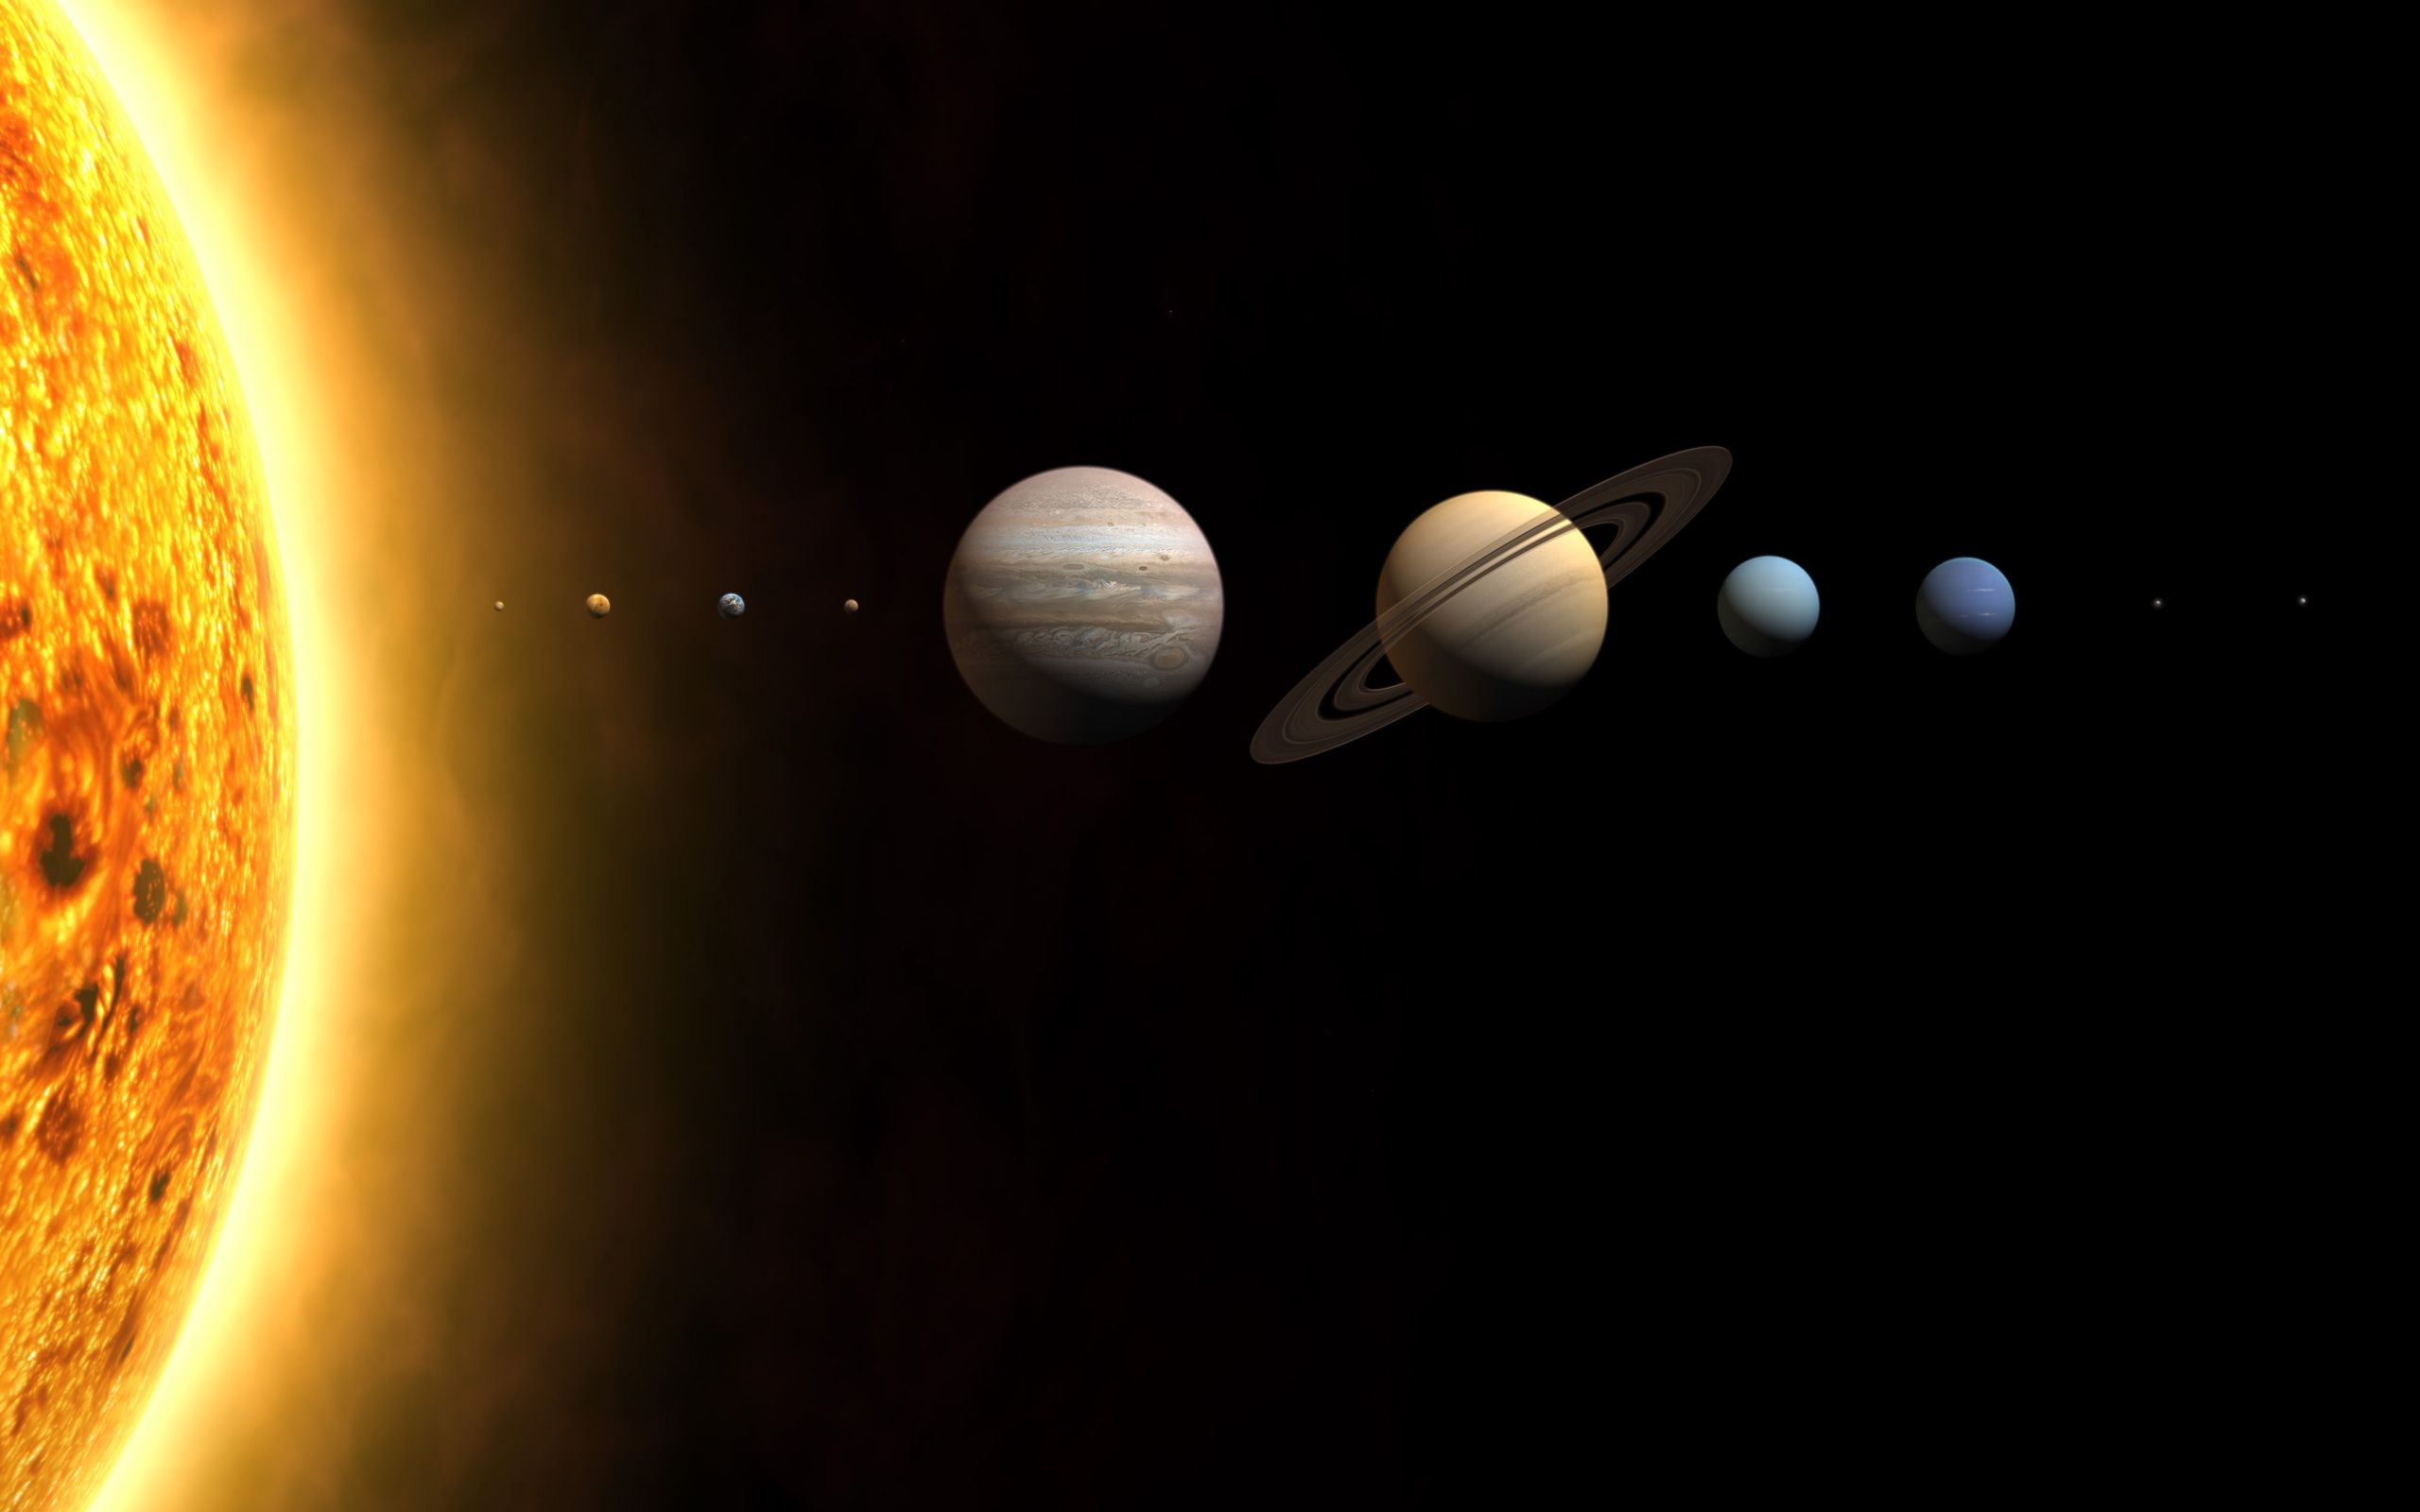 9 Planets, Eye-catching desktop wallpapers, Cosmic wonders, top picks, 2560x1600 HD Desktop